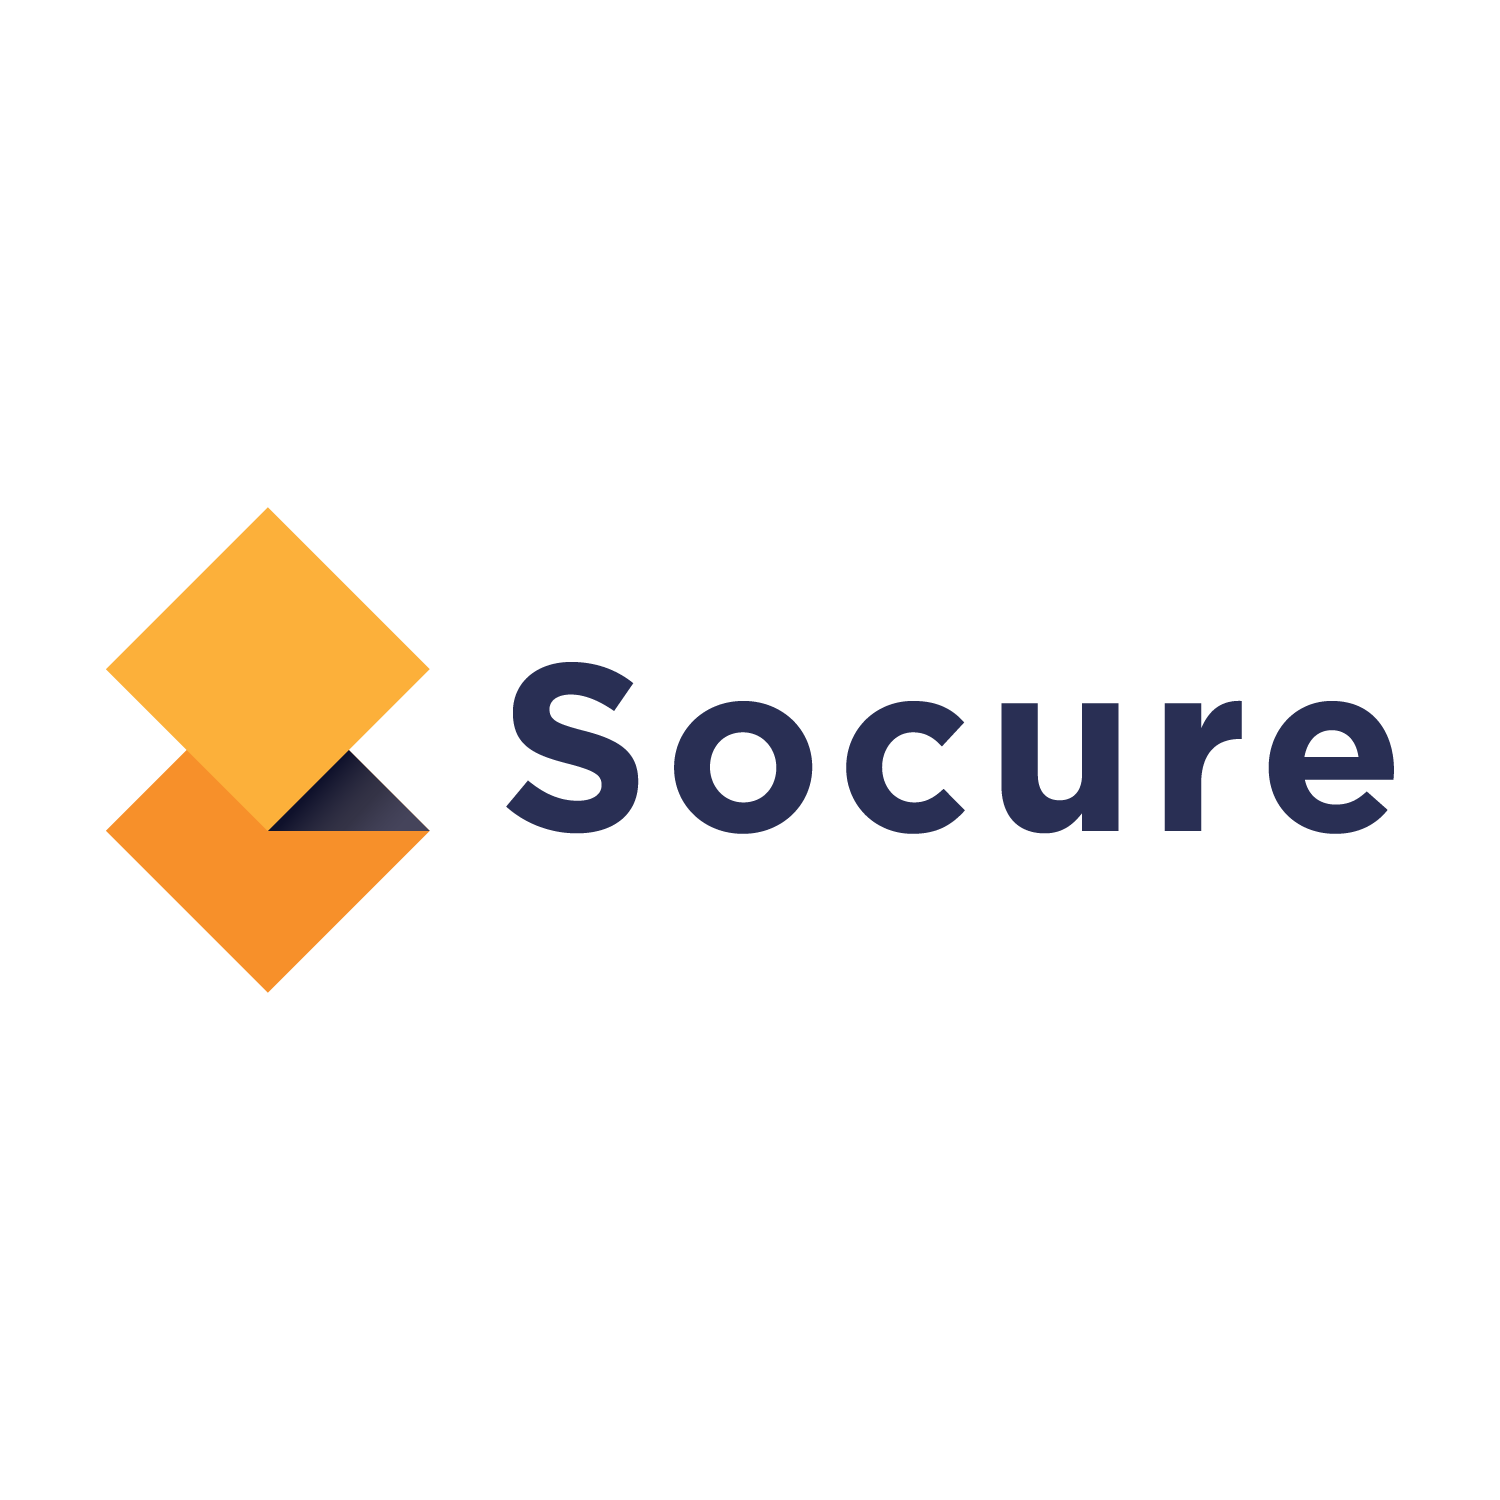 Socure Logotipo png